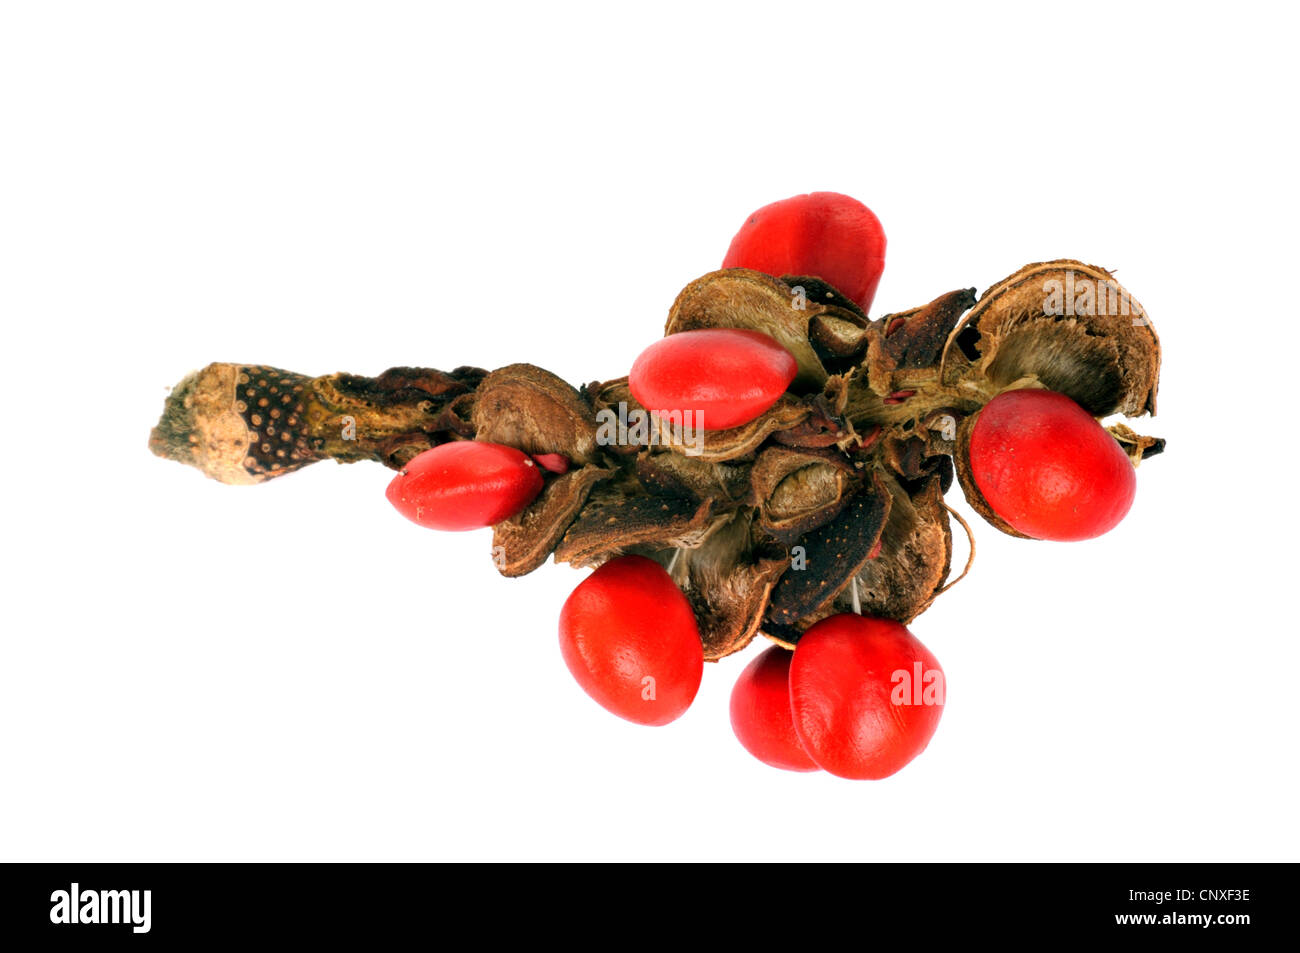 saucer magnolia (Magnolia x soulangiana, Magnolia soulangiana, Magnolia x soulangeana, Magnolia soulangeana), fruit with red seeds Stock Photo